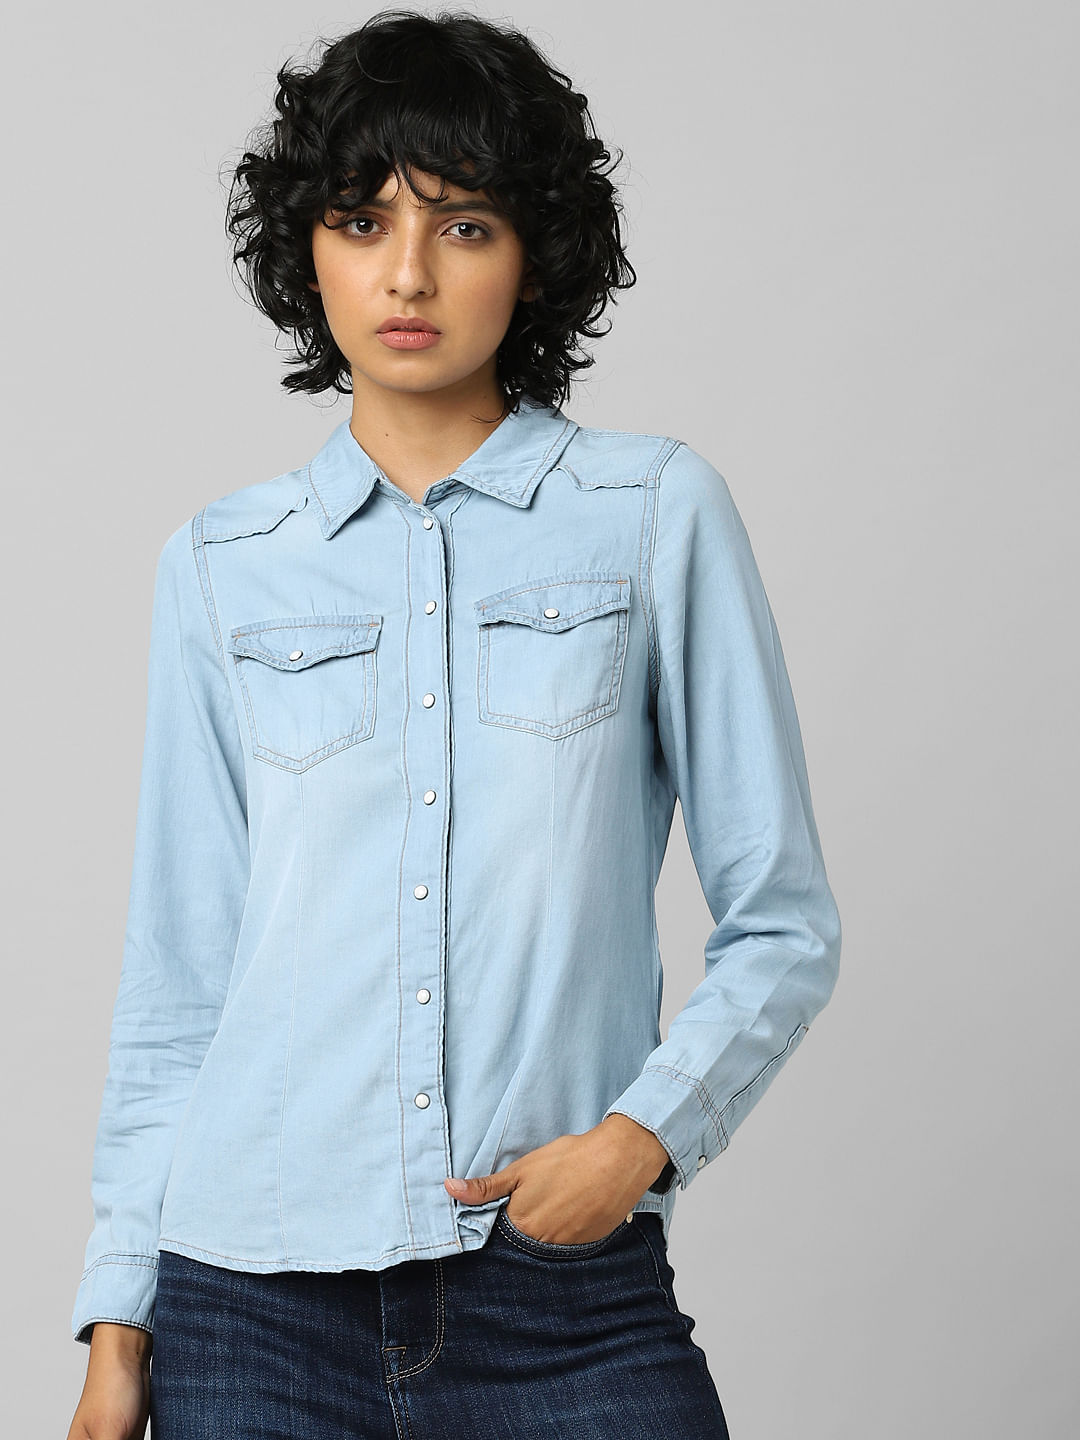 Buy GUOCAI Women Longline Fashion Button Down Loose Tassles Washed Denim  Shirt Blouse Light Blue US S at Amazon.in